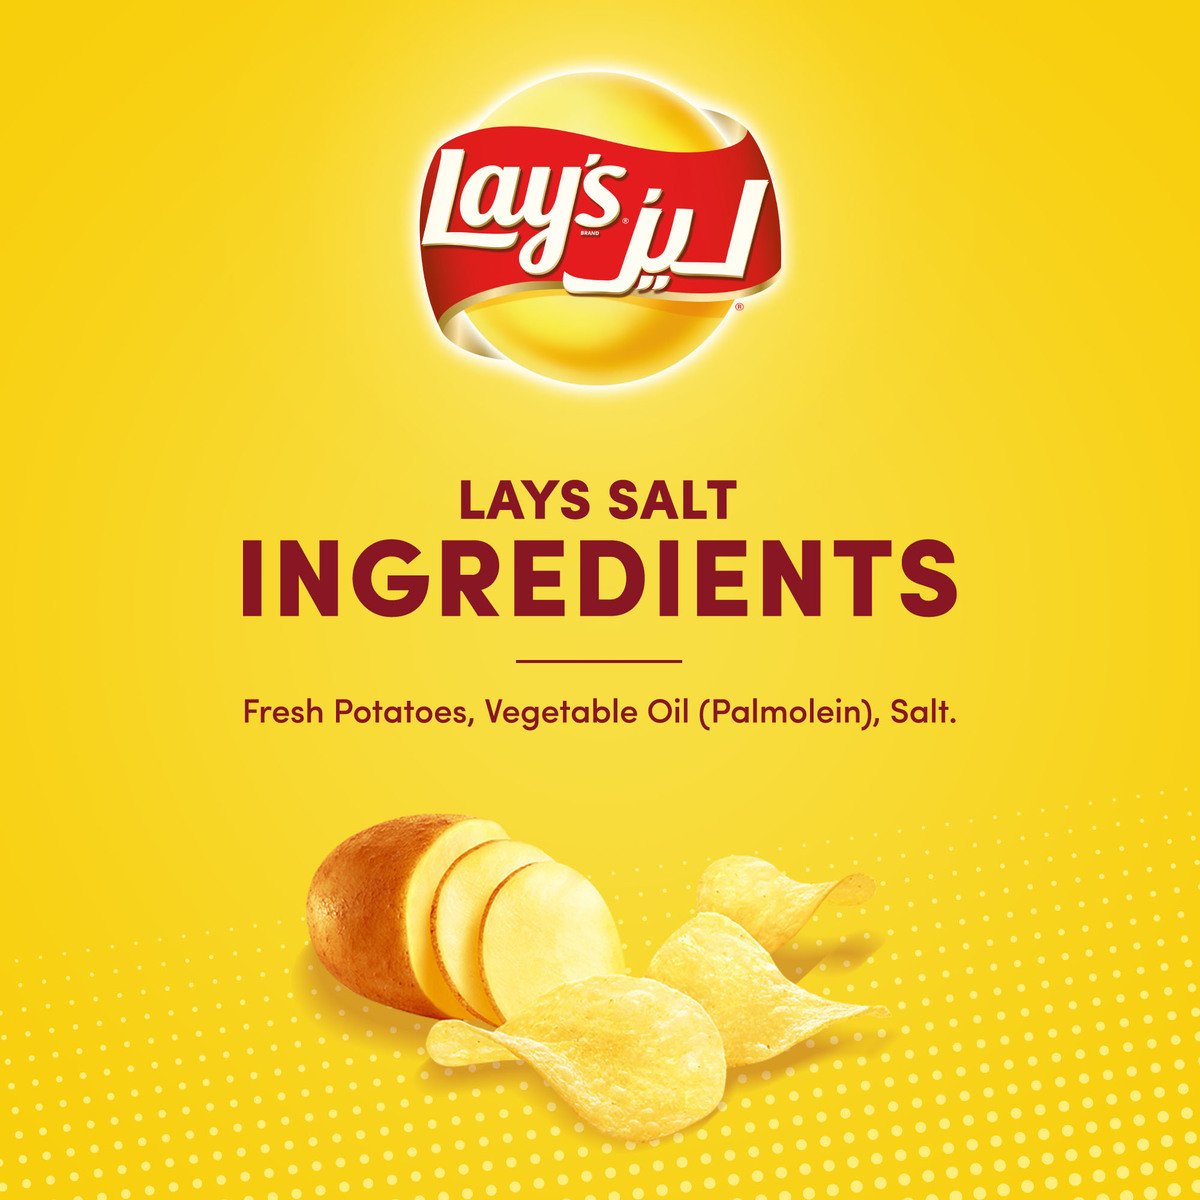 Lay's Potato Chips Salt 40 g